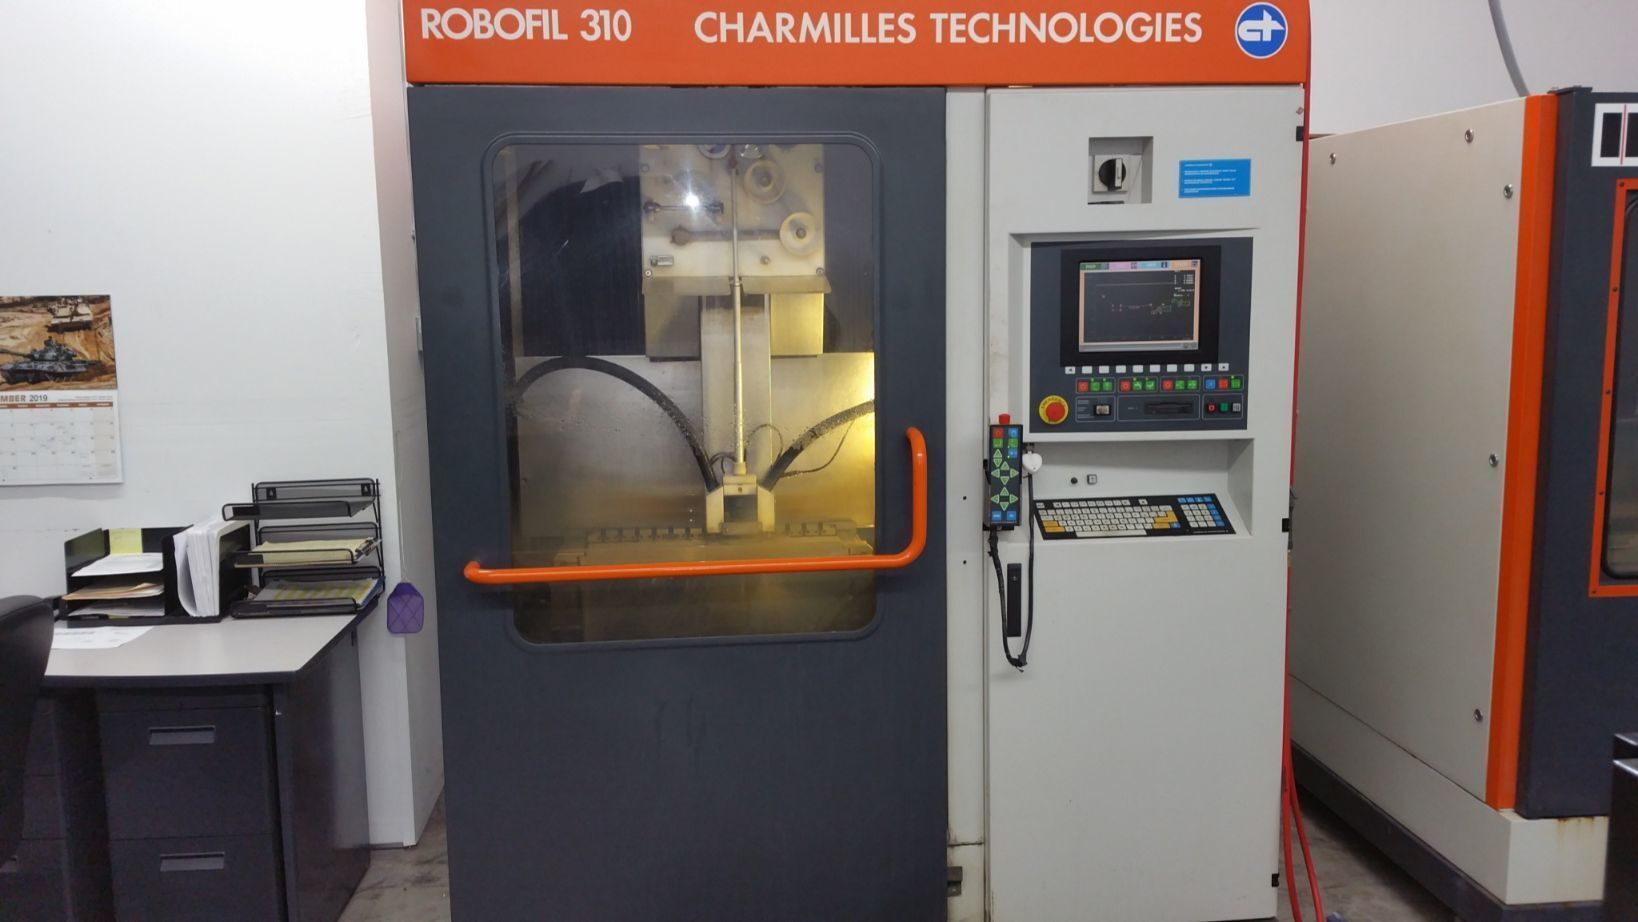 CHARMILLES TECHNOLOGIES ROBOFIL 310 Sold Equipment | MD Equipment Services LLC